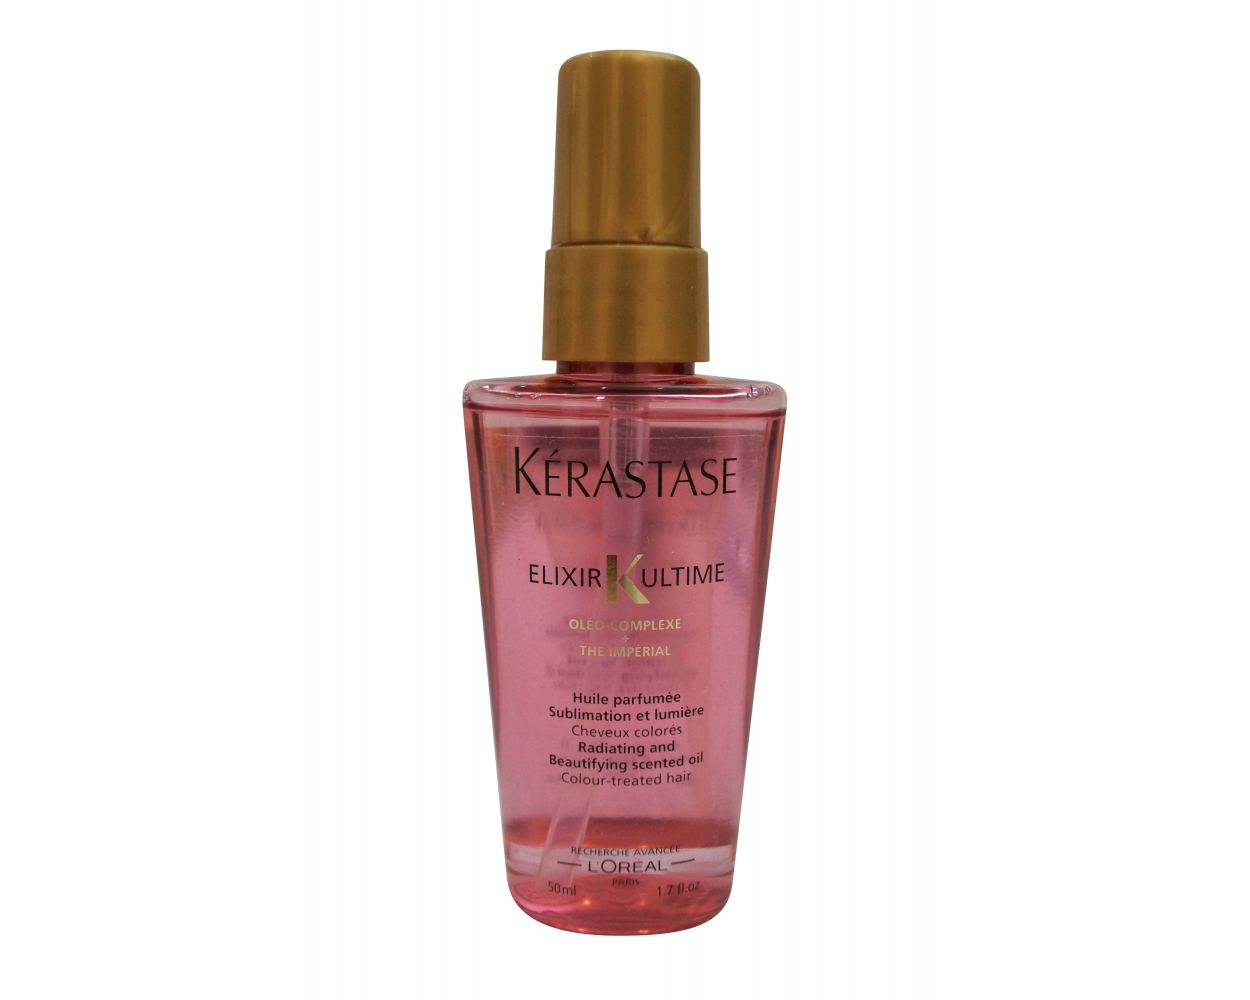 Kerastase Elixir Ultime Imperial Versatile Nourish Oil Treated Hair | Conditioner - Beautyvice.com